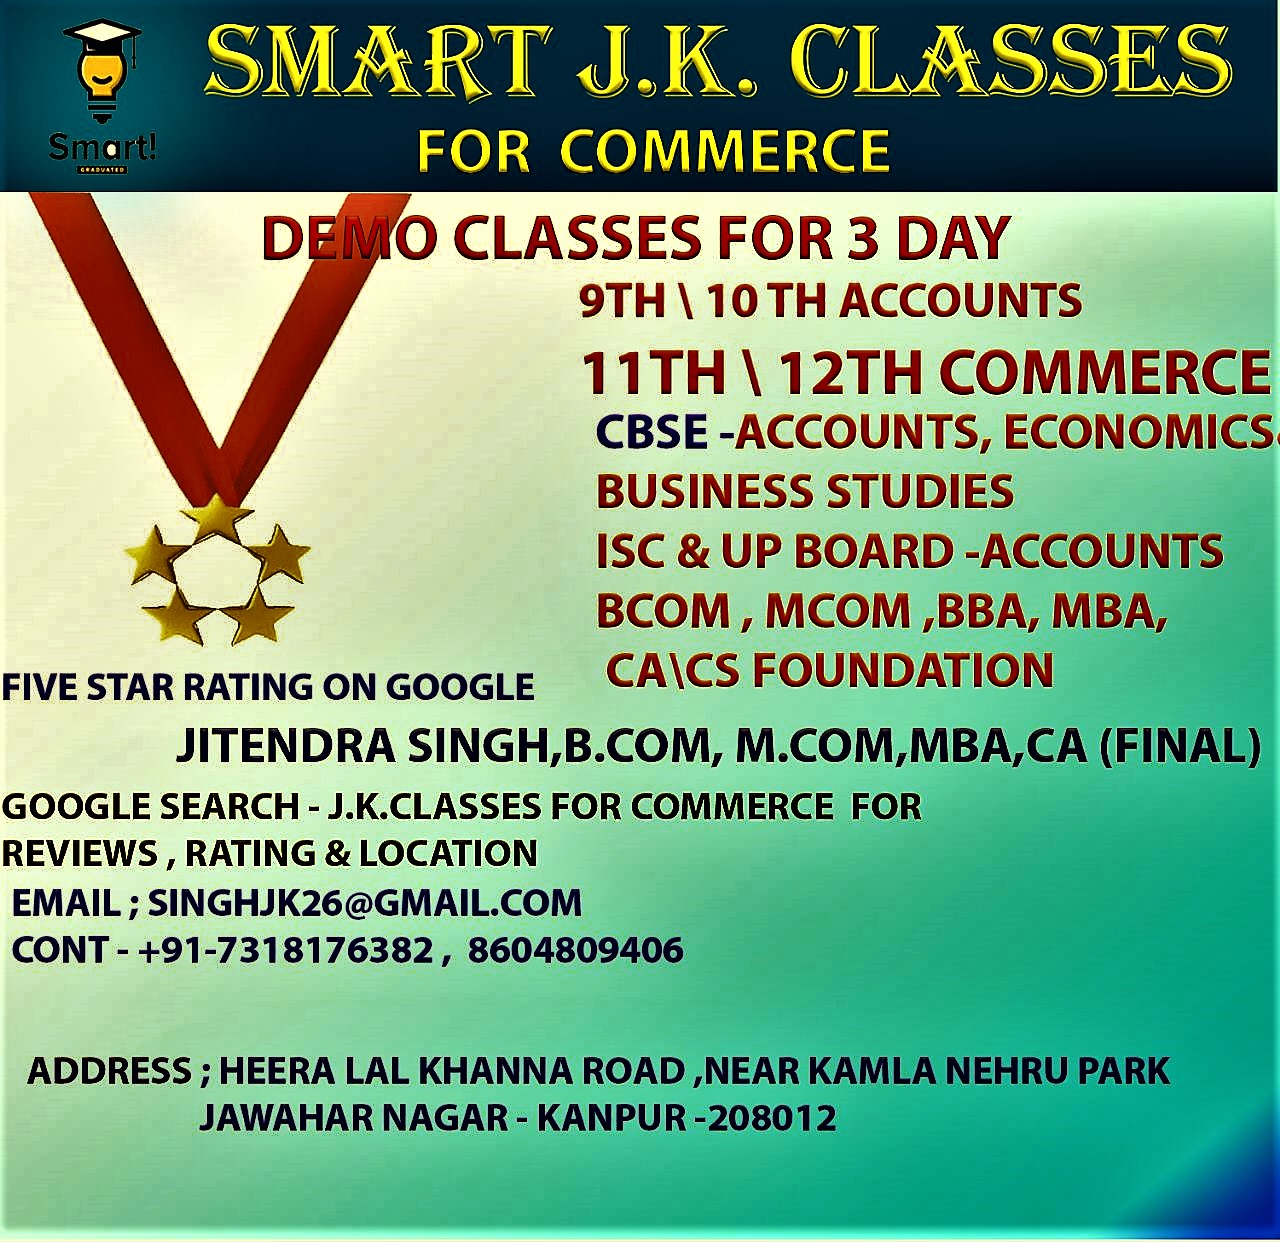 24094SMART JK CLASSES FOR COMMERCE
Class 11th & 12th B.Com M.Com BBA MBA CA/CMA Inter